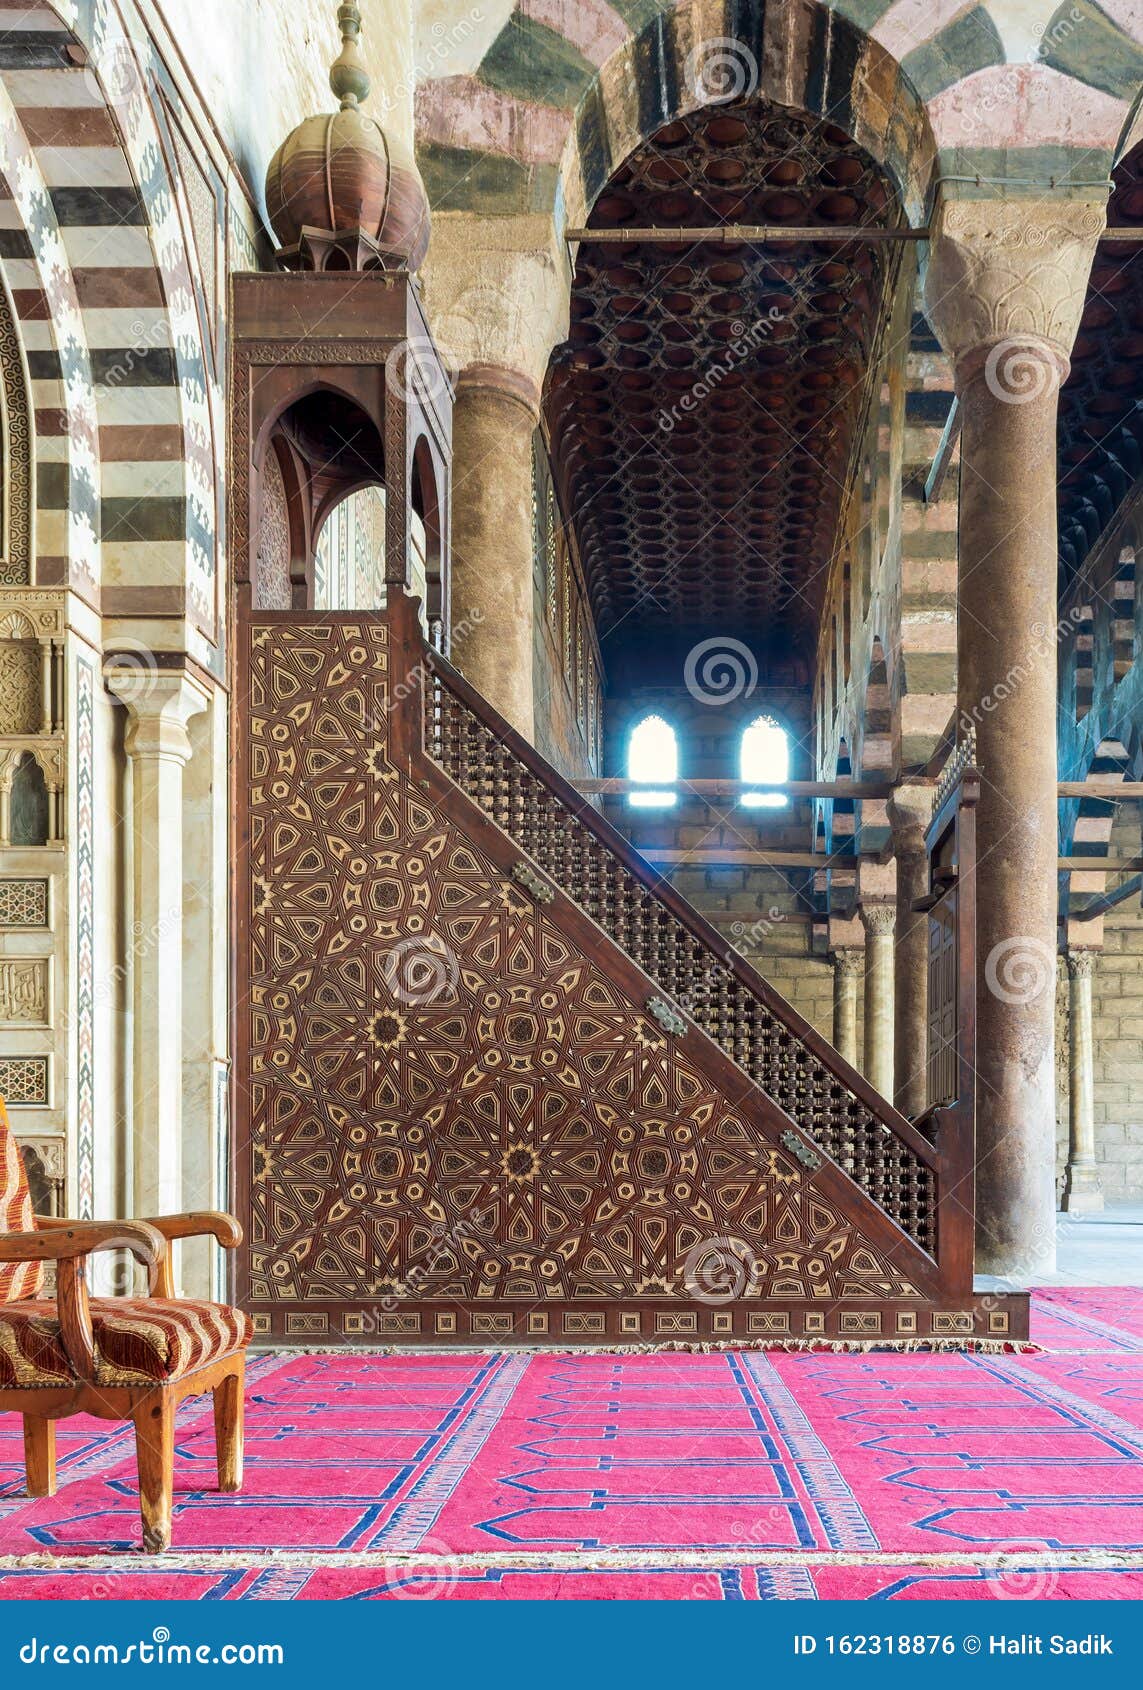 minbar decorated with arabesque geometrical patterns, historic ibn qalawun mosque, cairo, egypt